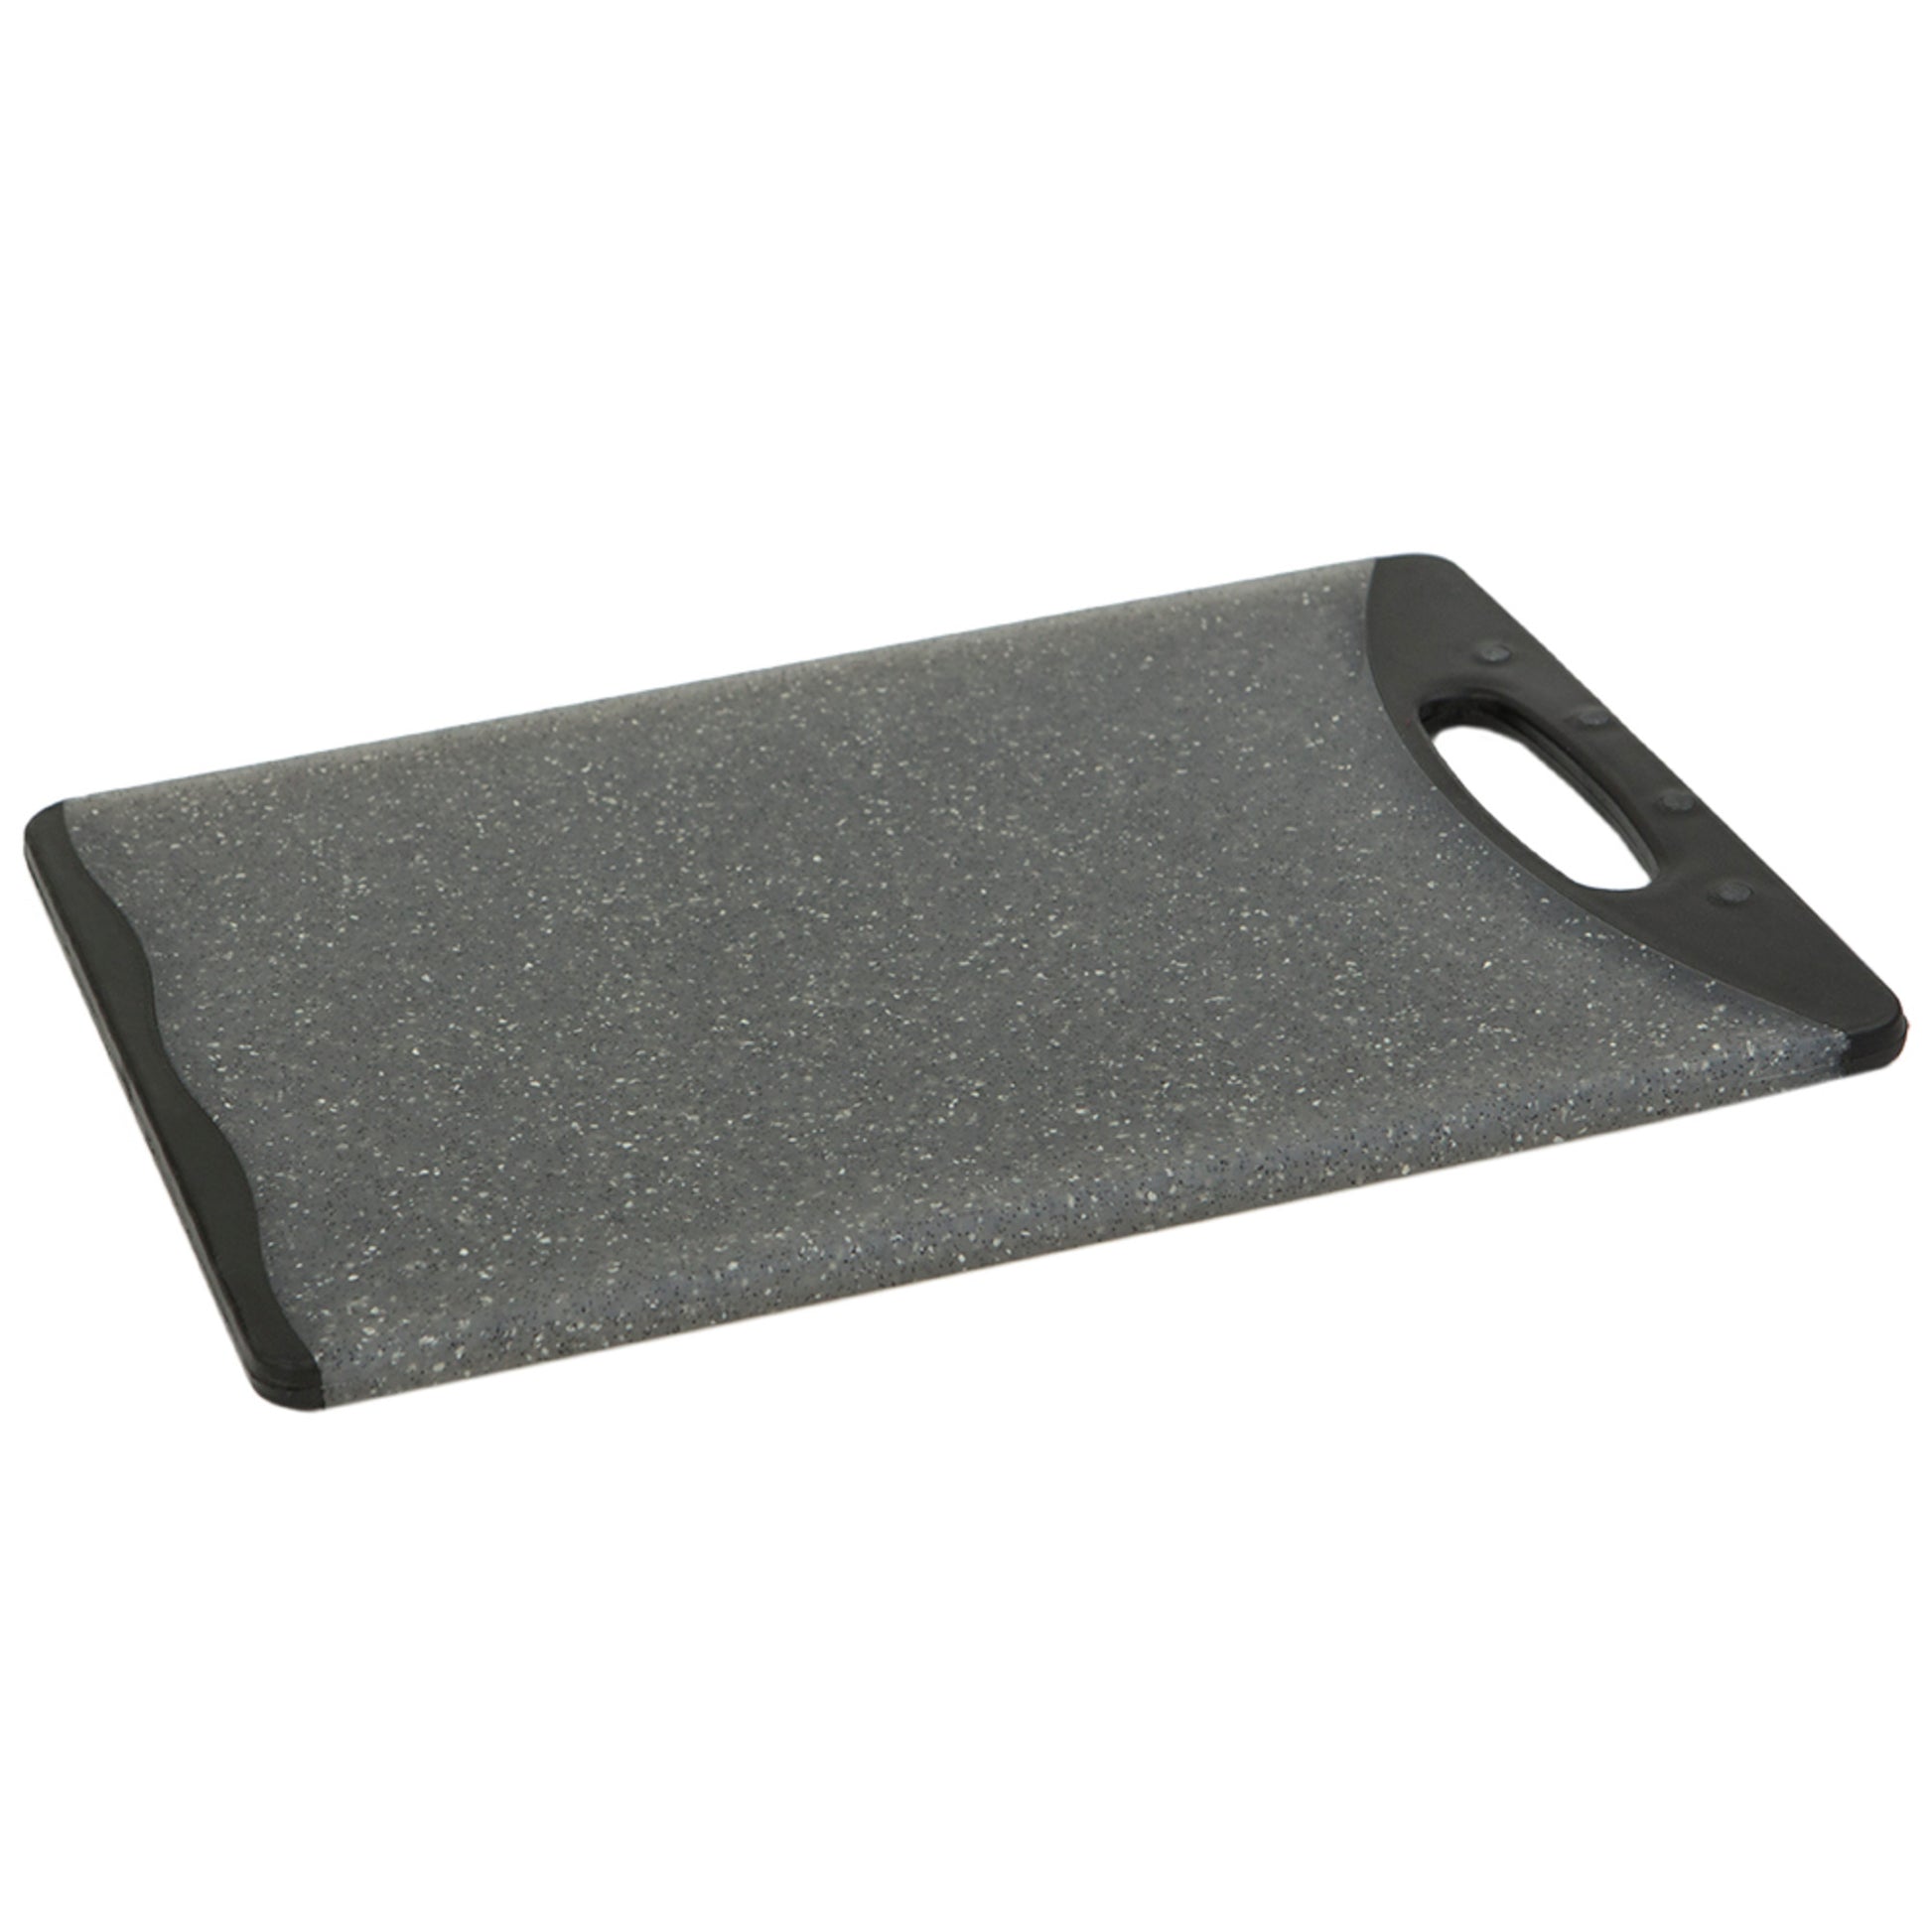 Home Basics Double Sided 10" x 14.5" Granite Plastic Cutting Board, Grey - Grey